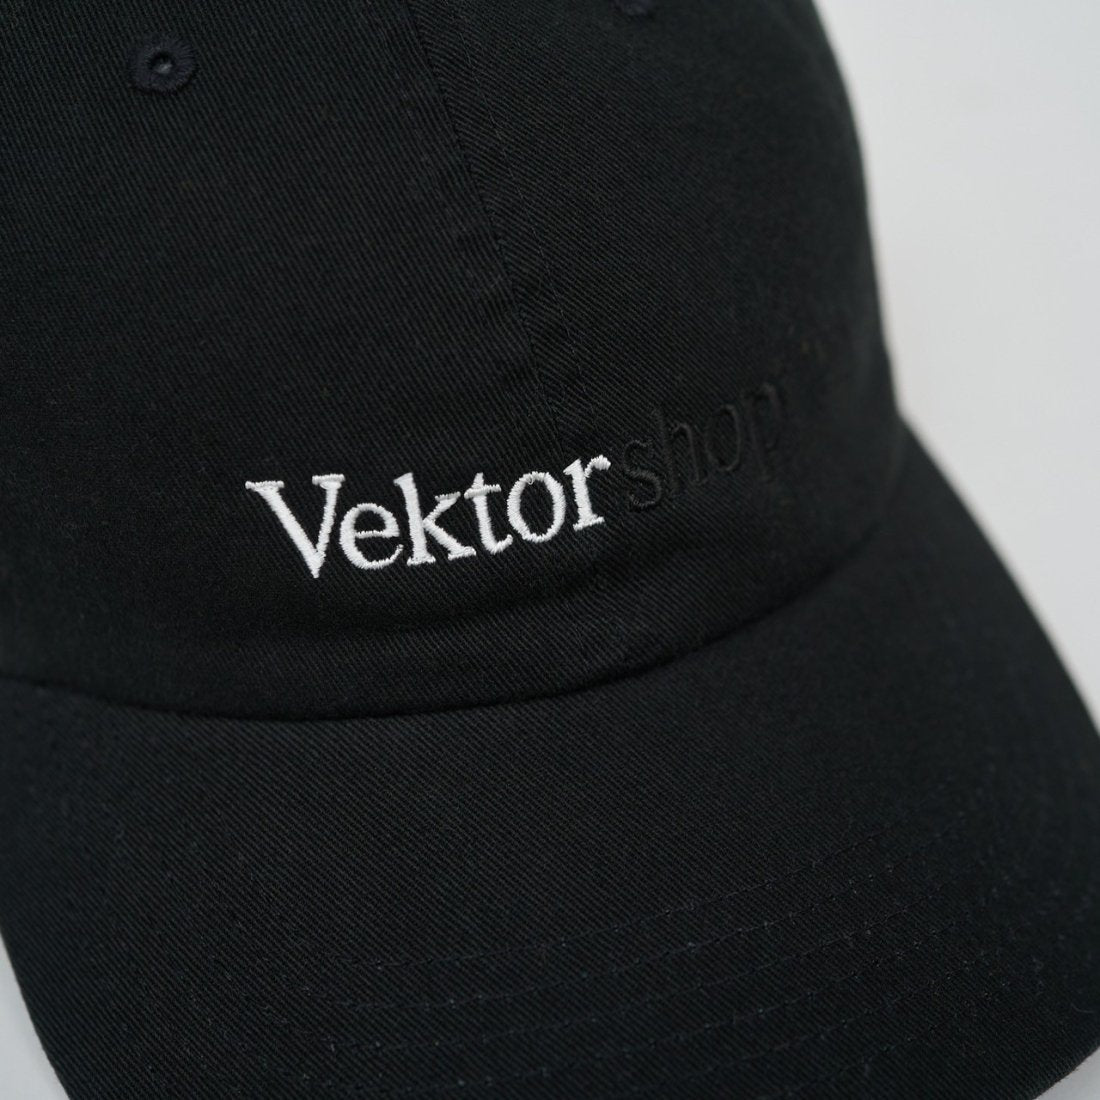 Vektor shop® (ベクターショップ)  / Signature Cap